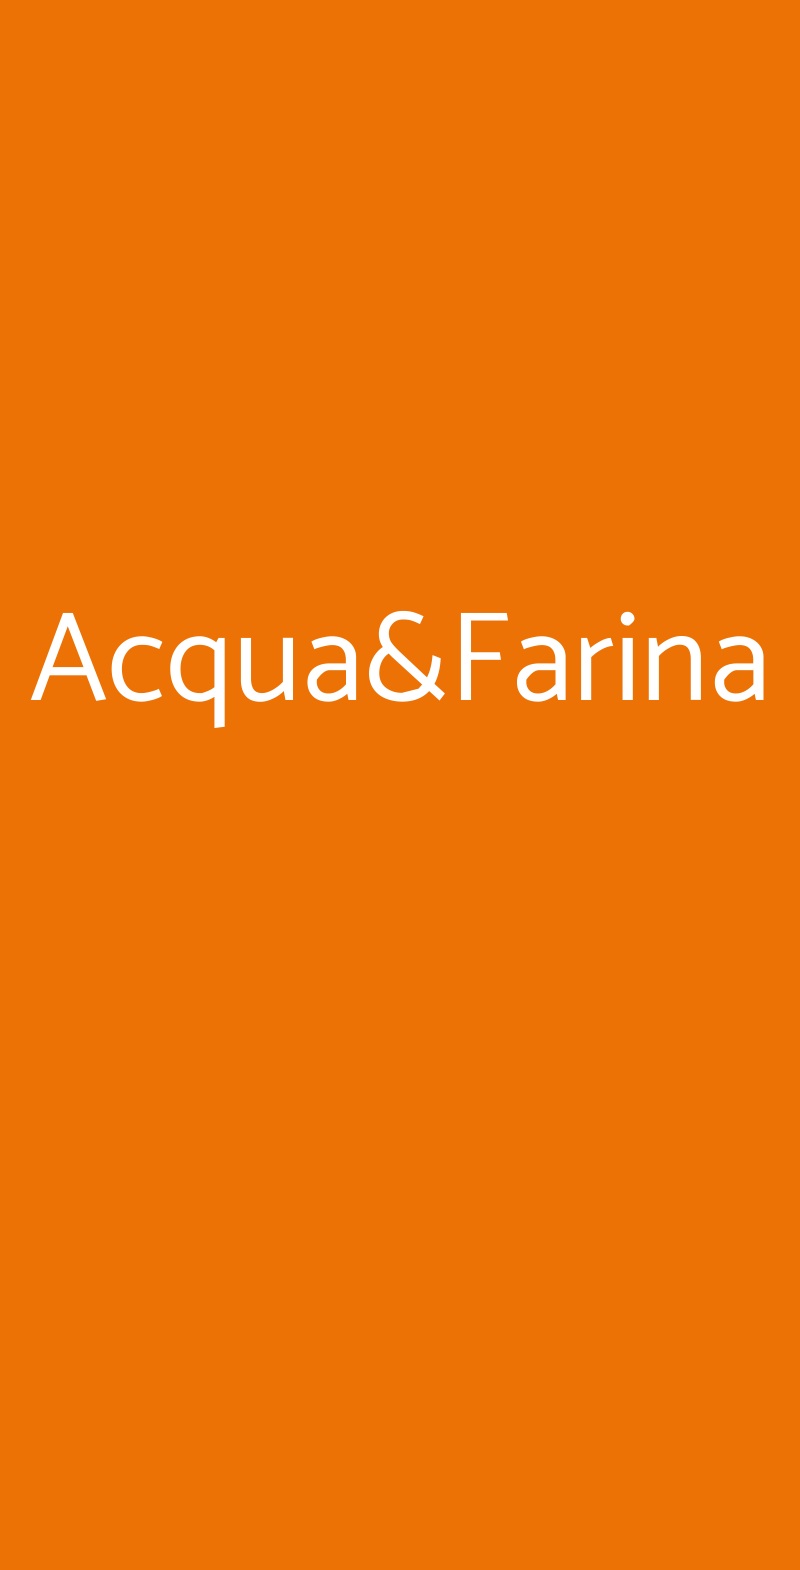 Acqua&Farina Catania menù 1 pagina